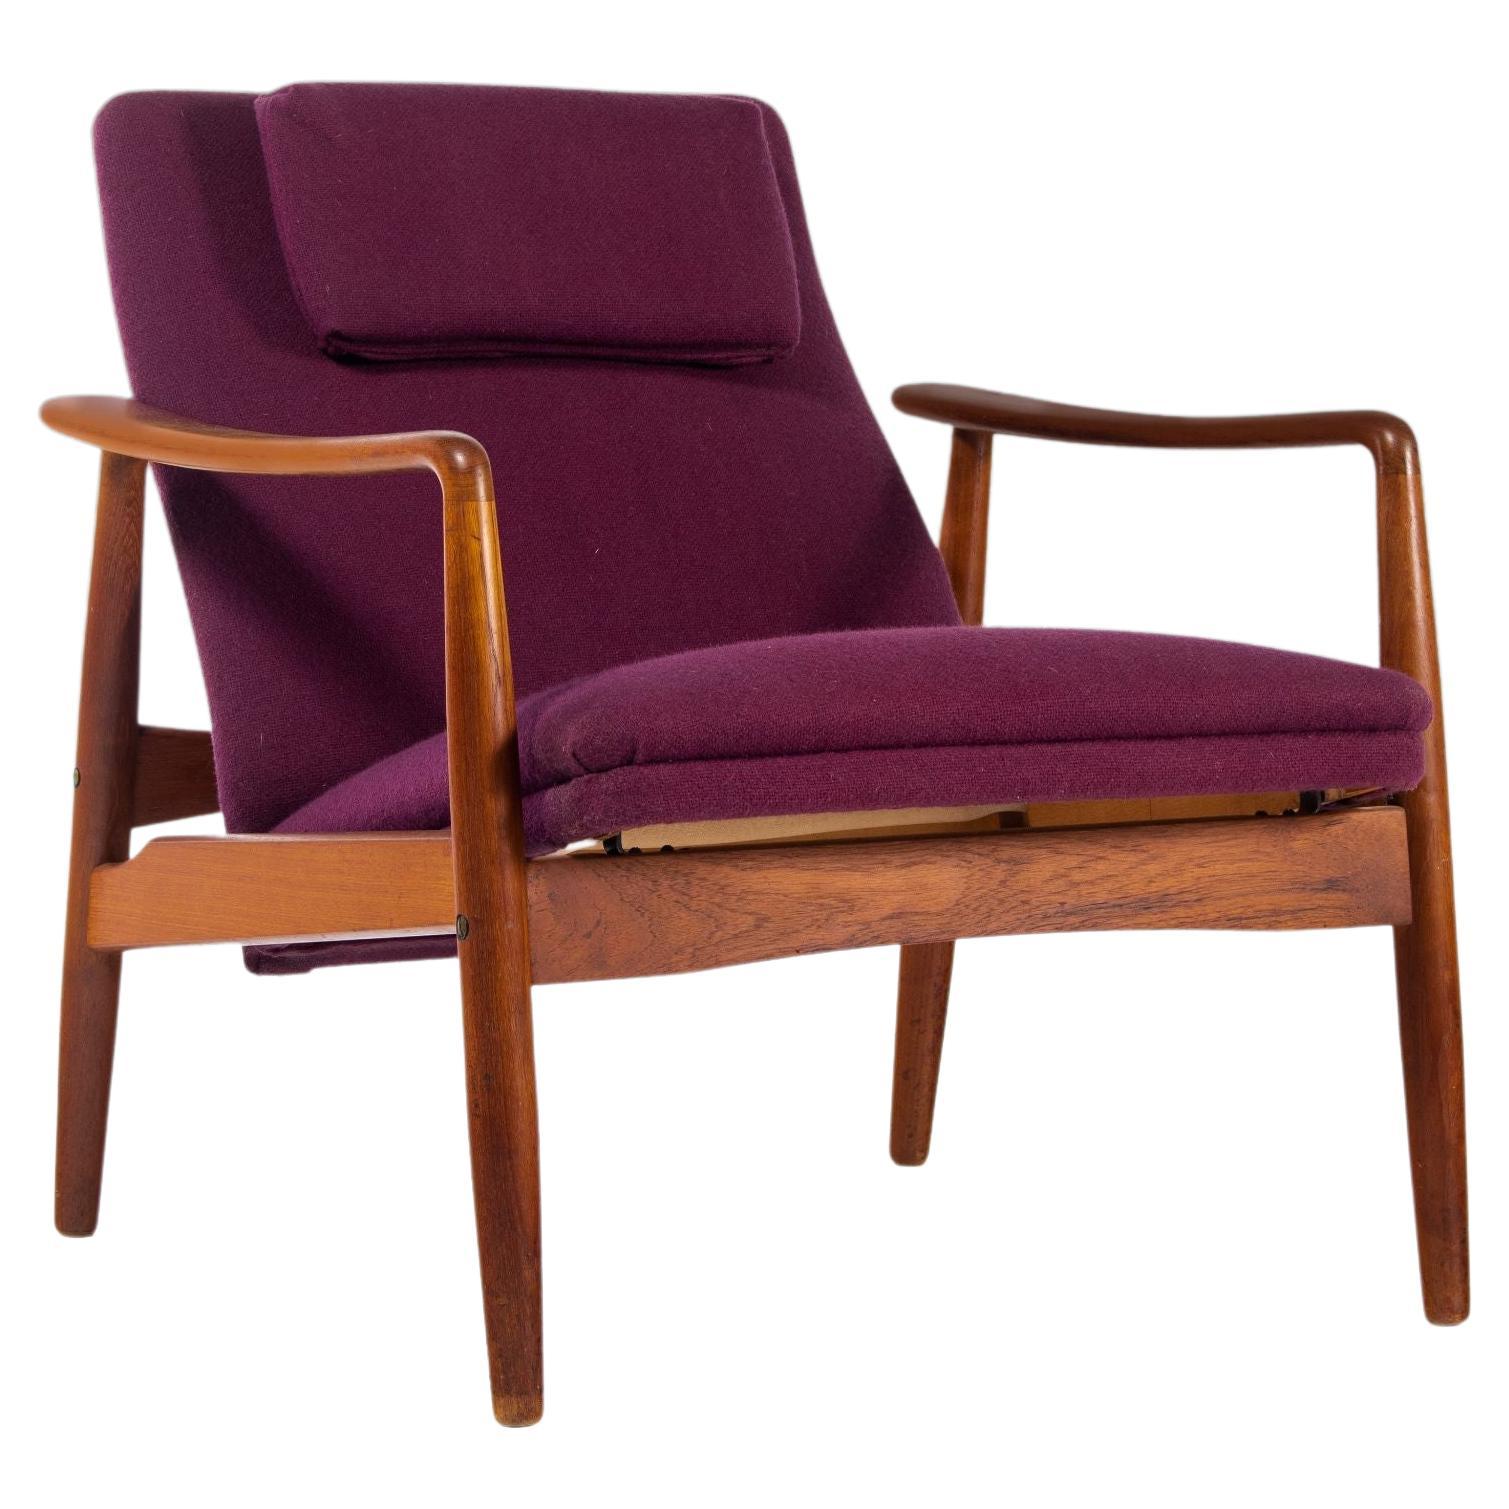 Danish Modern Lounge Chair in Teak Wood by Soren J. Ladefoged, Denmark, c. 1950s For Sale